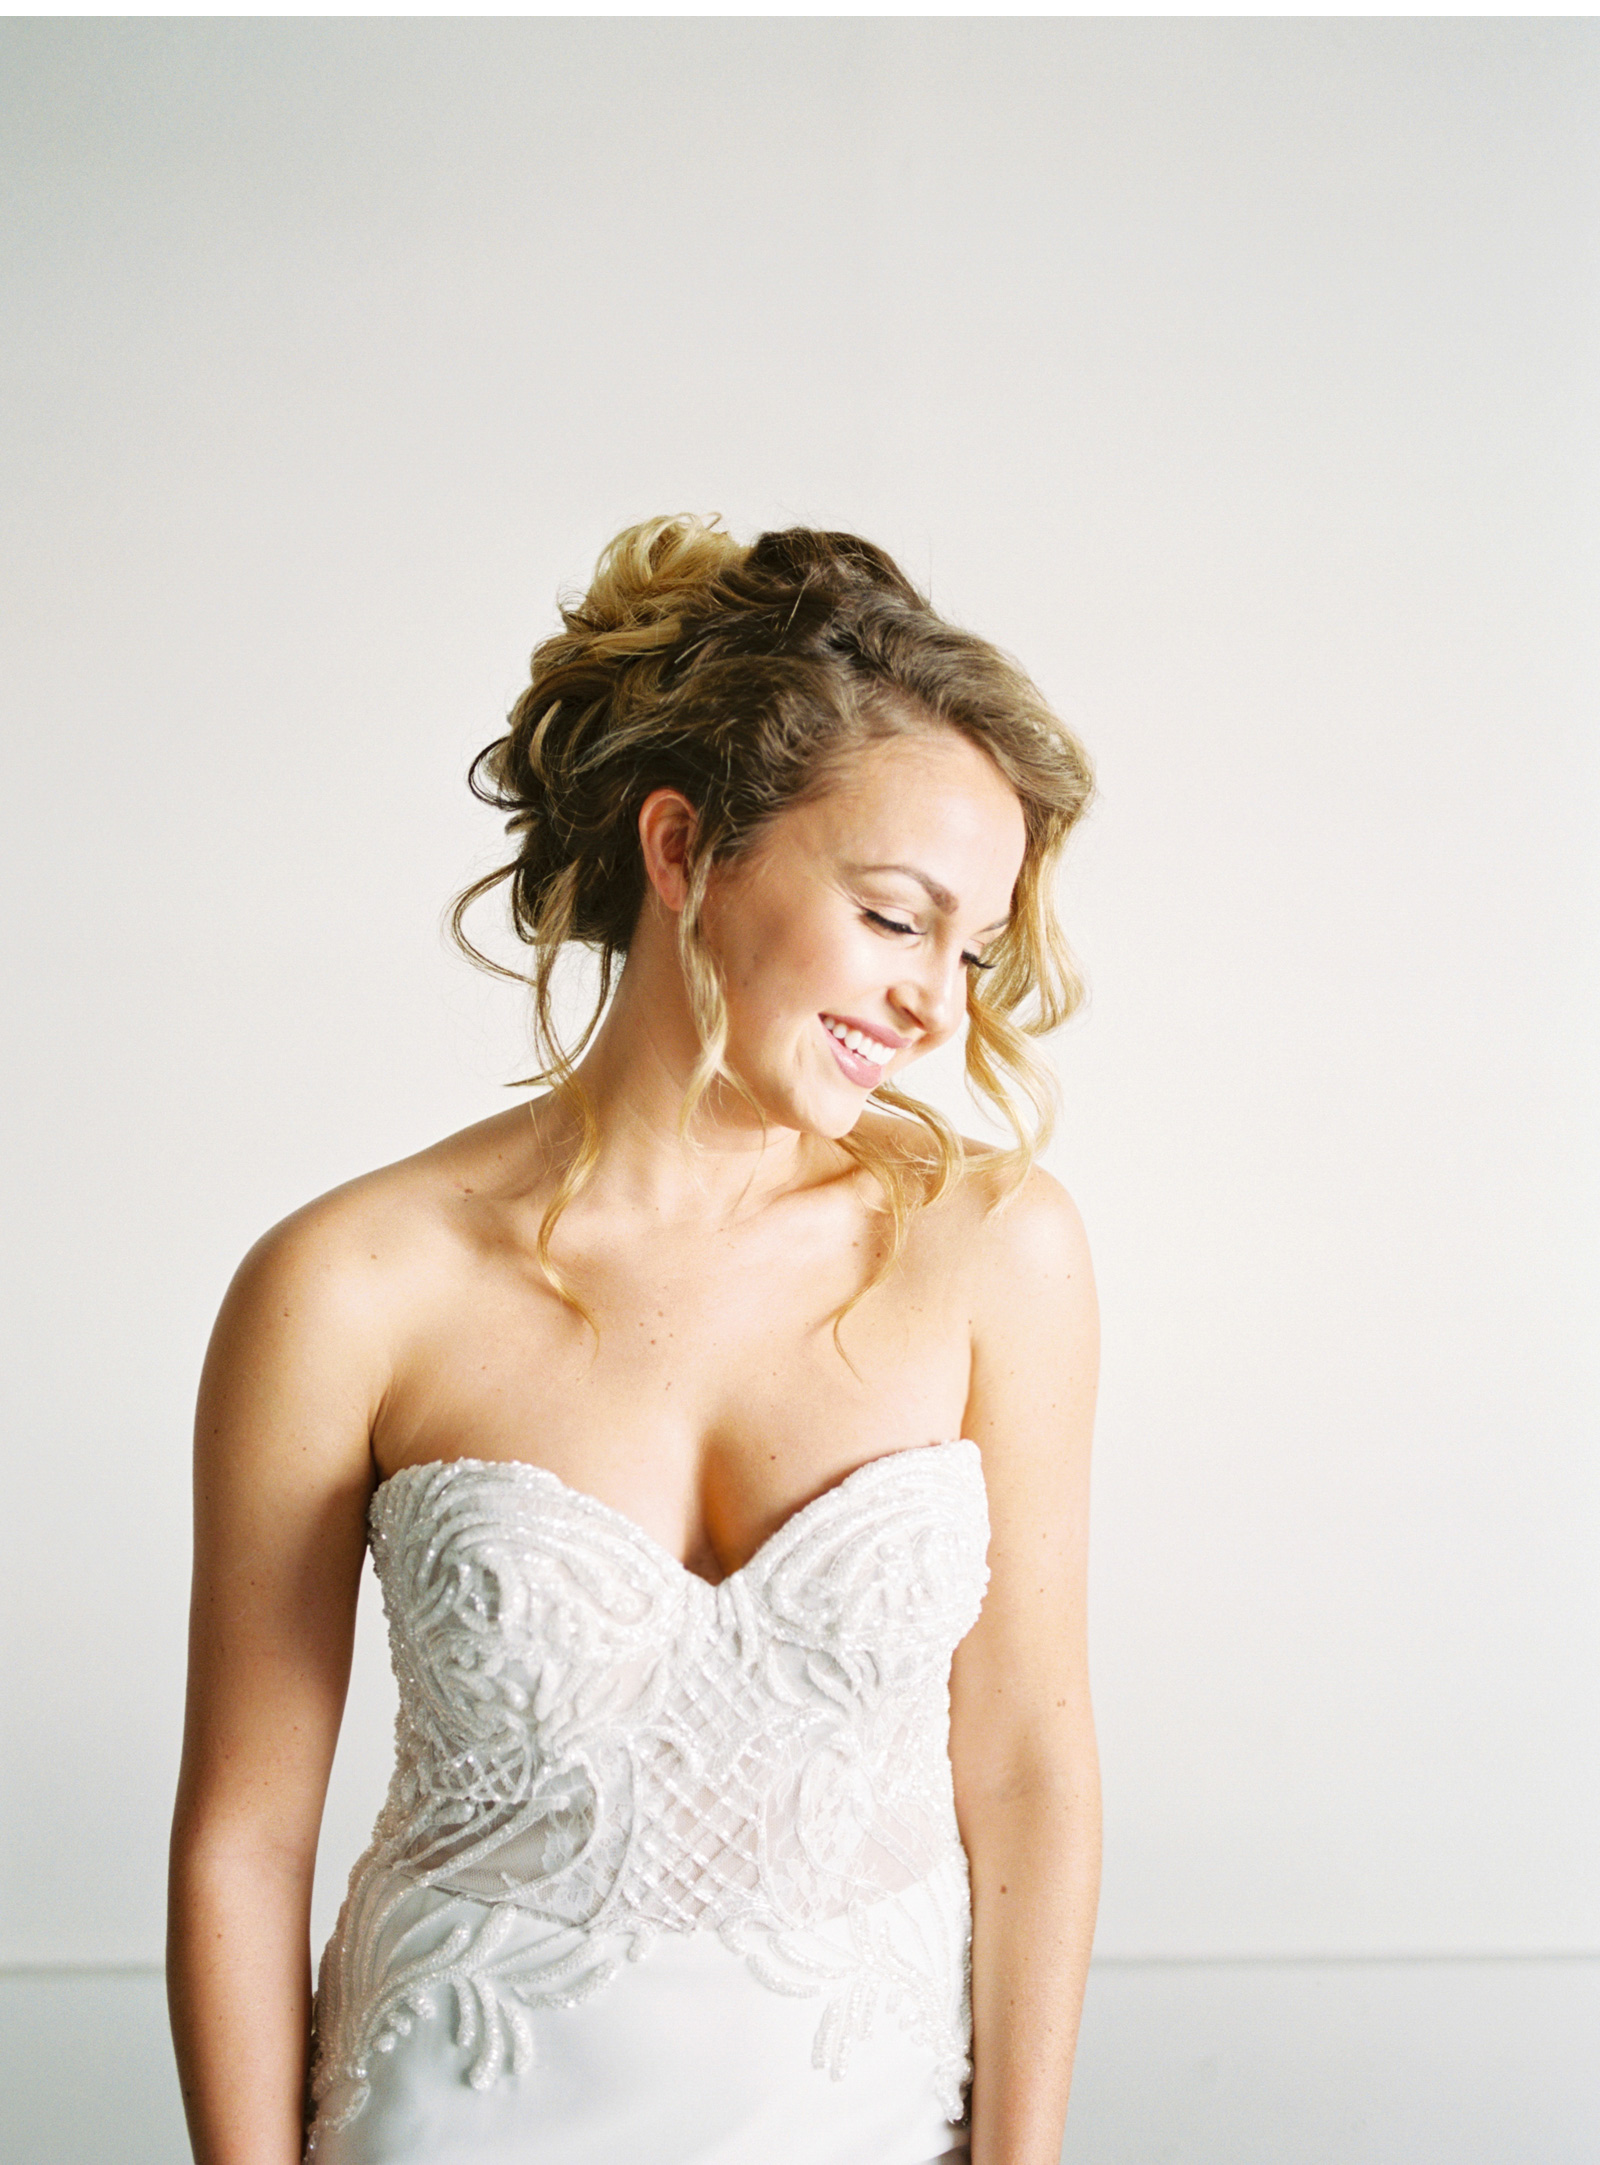 Malibu-Wedding-Photographer-Natalie-Schutt-Photography-Style-Me-Pretty-Dear-Gray-In-Studio_10.jpg